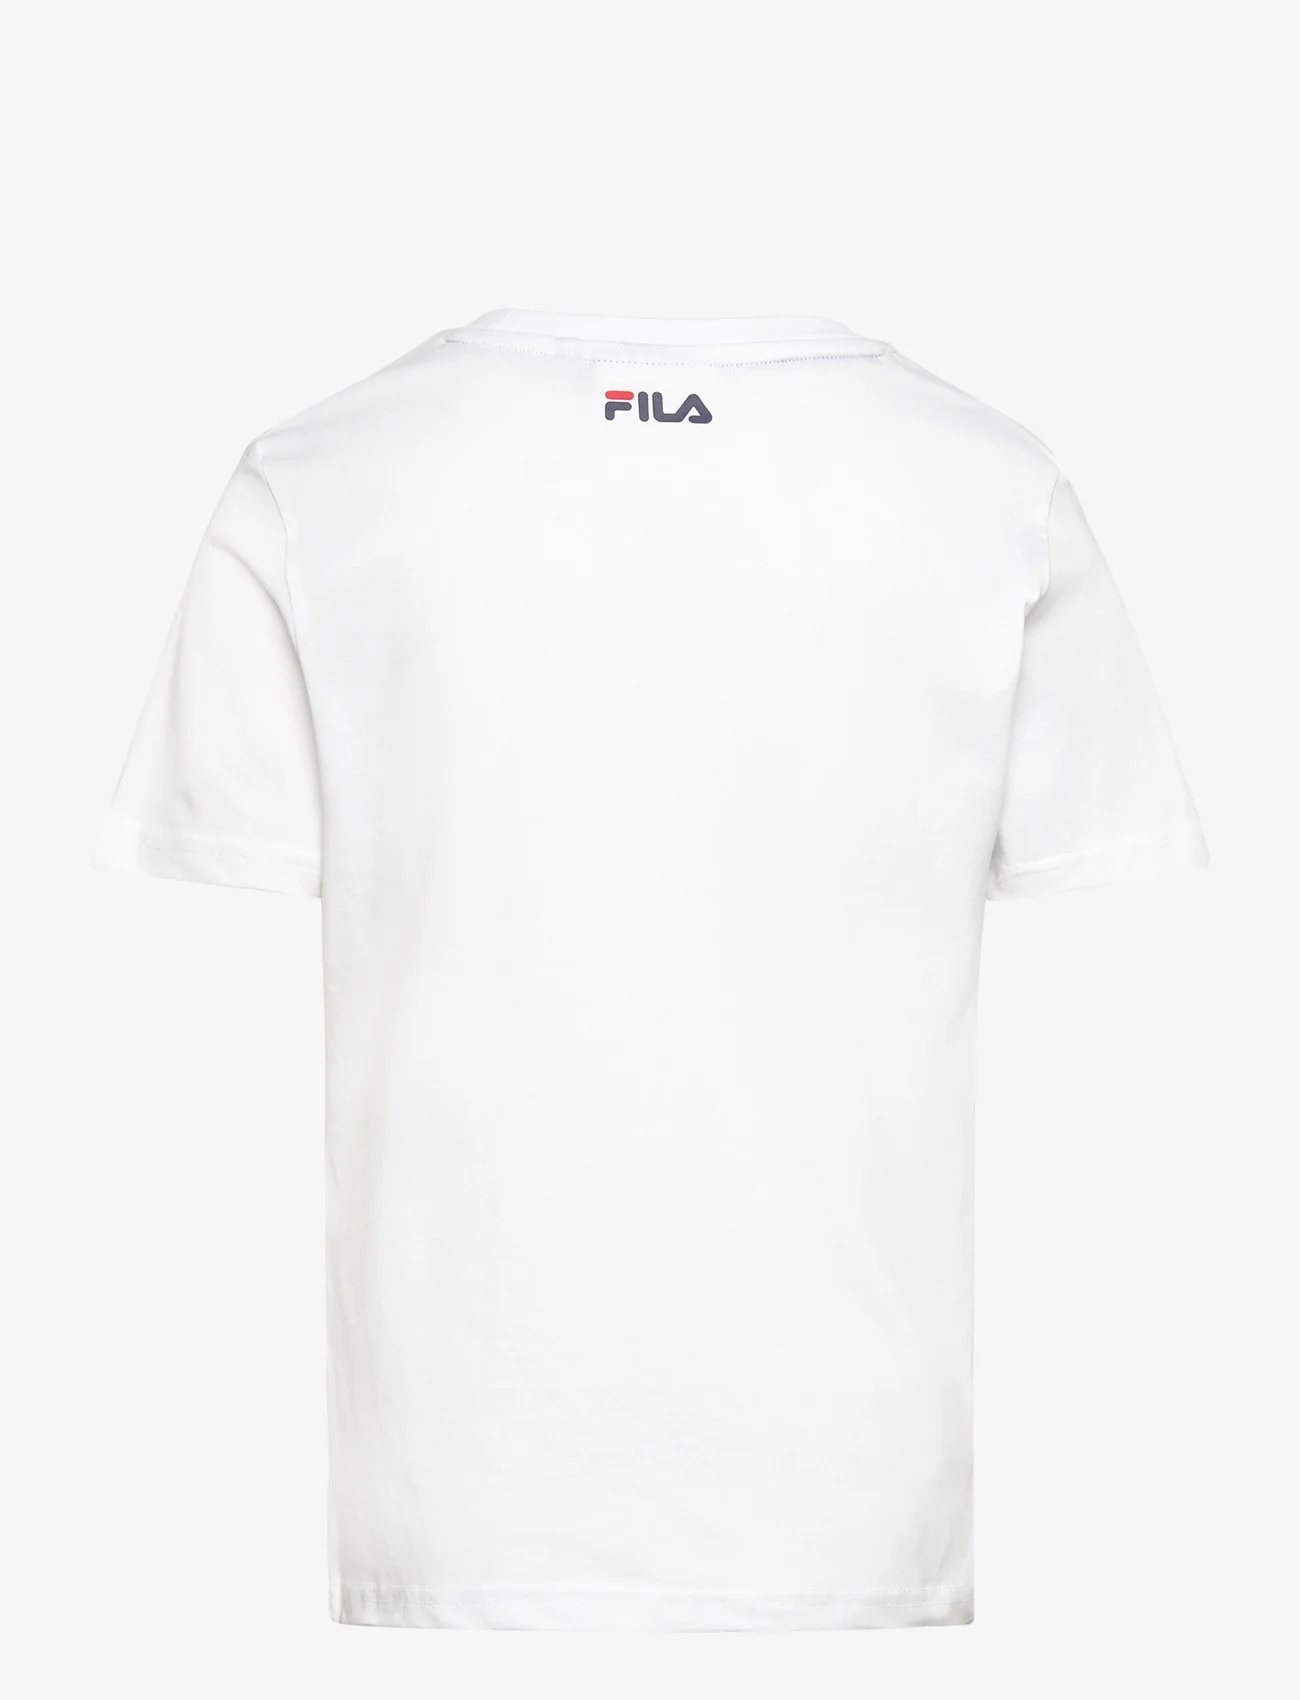 FILA - BAIA MARE classic logo tee - kurzärmelig - bright white - 1